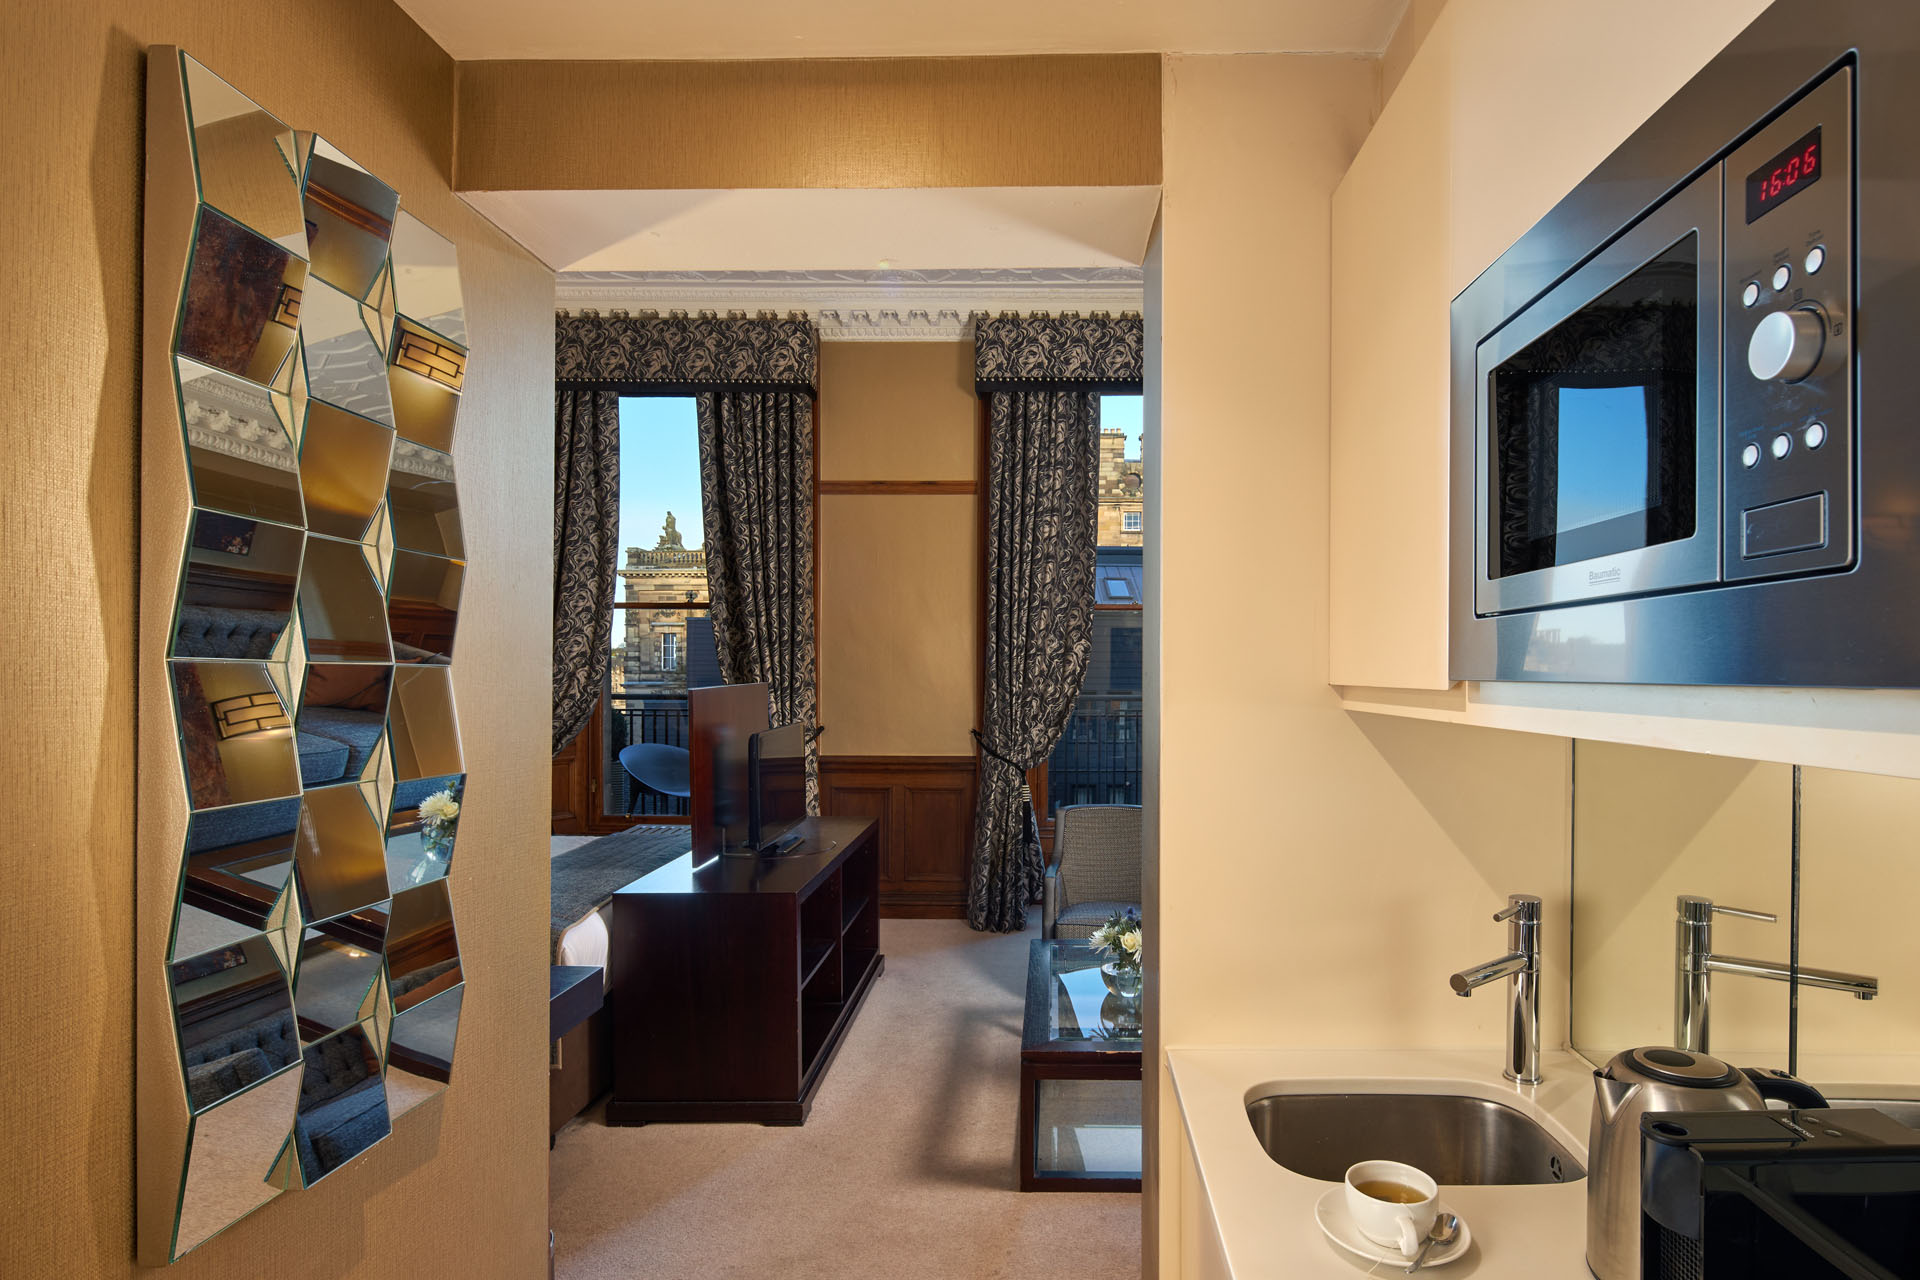 Kitchenette of Observatory Suite in Edinburgh hotel